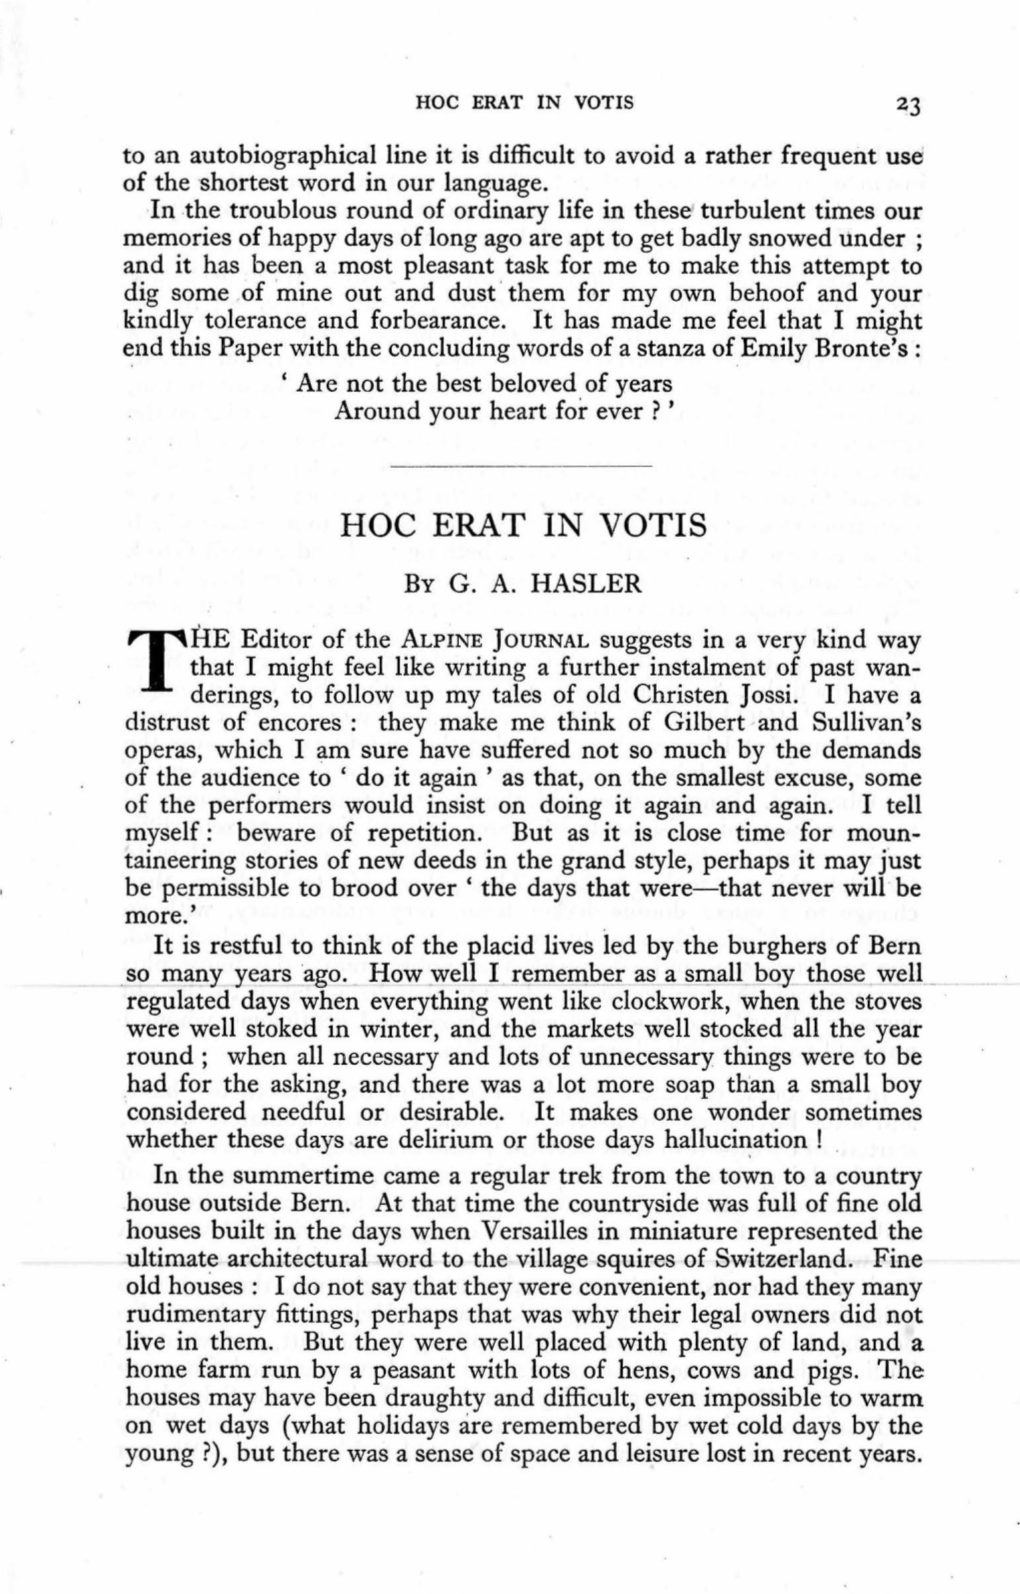 HOC ERAT in VOTIS G. A. Hasler